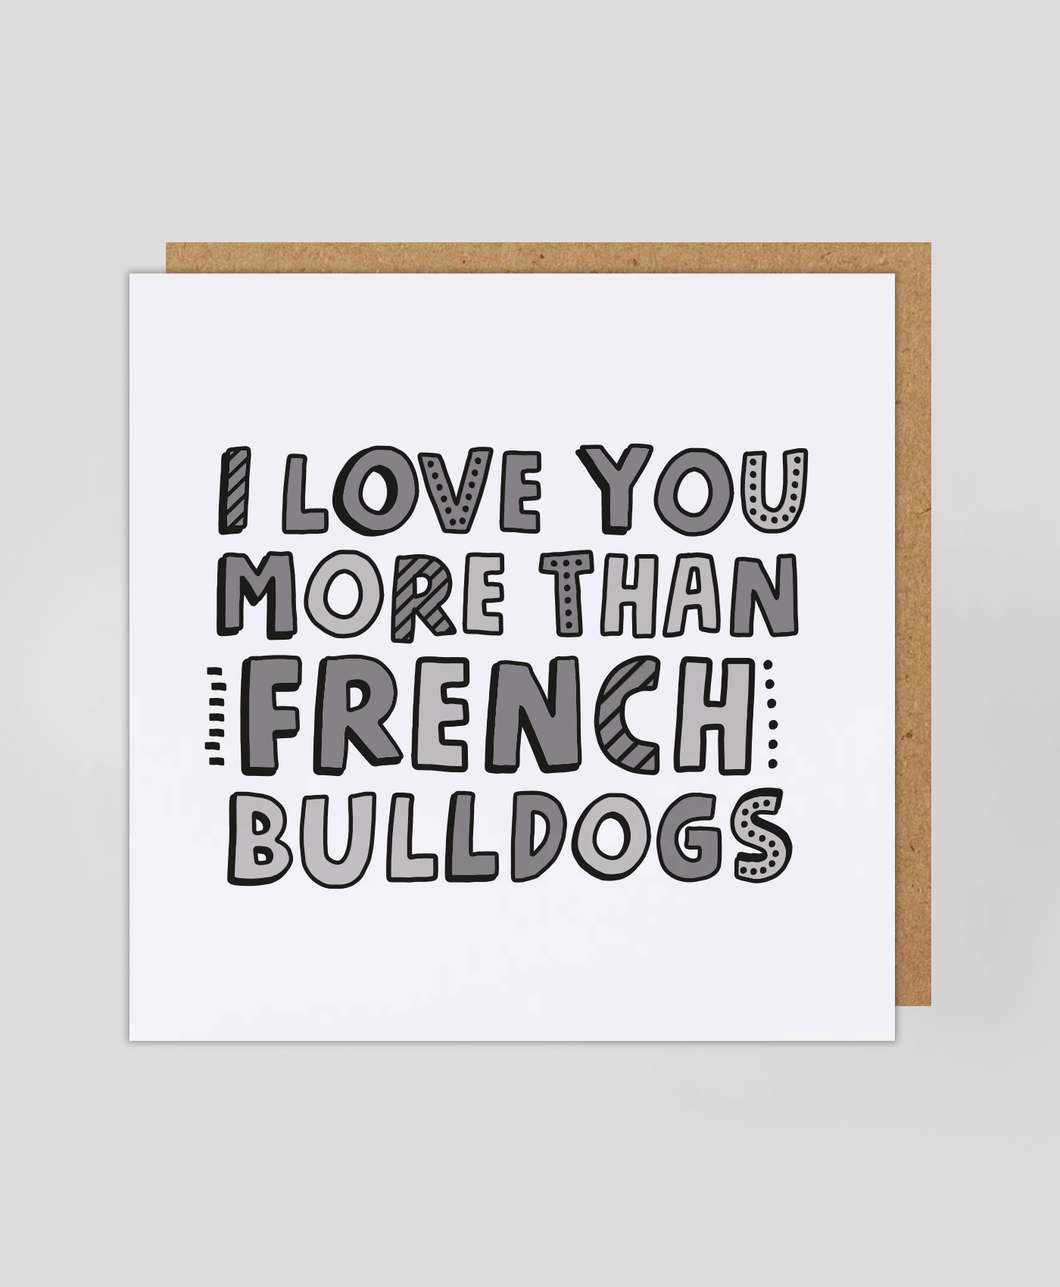 French Bulldogs - Greetings Card